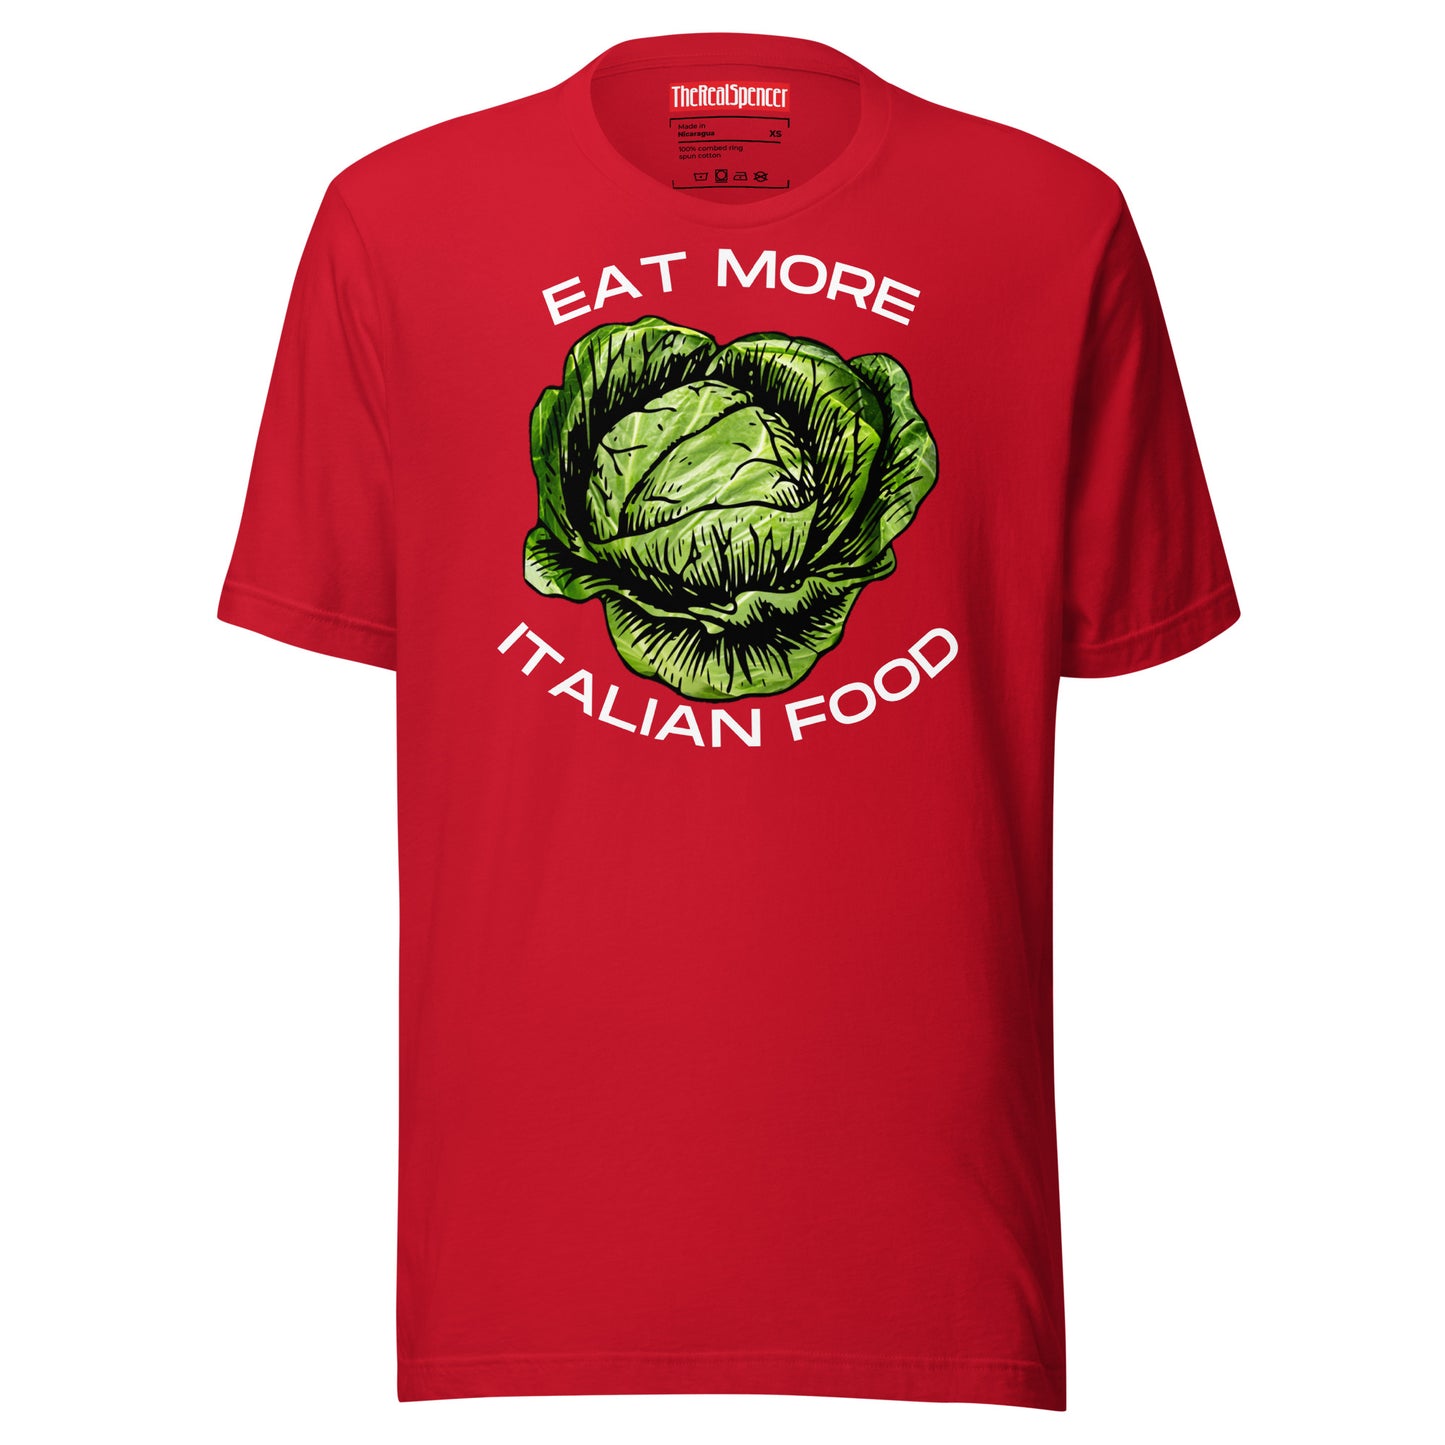 Eat More Italian Food T-Shirt